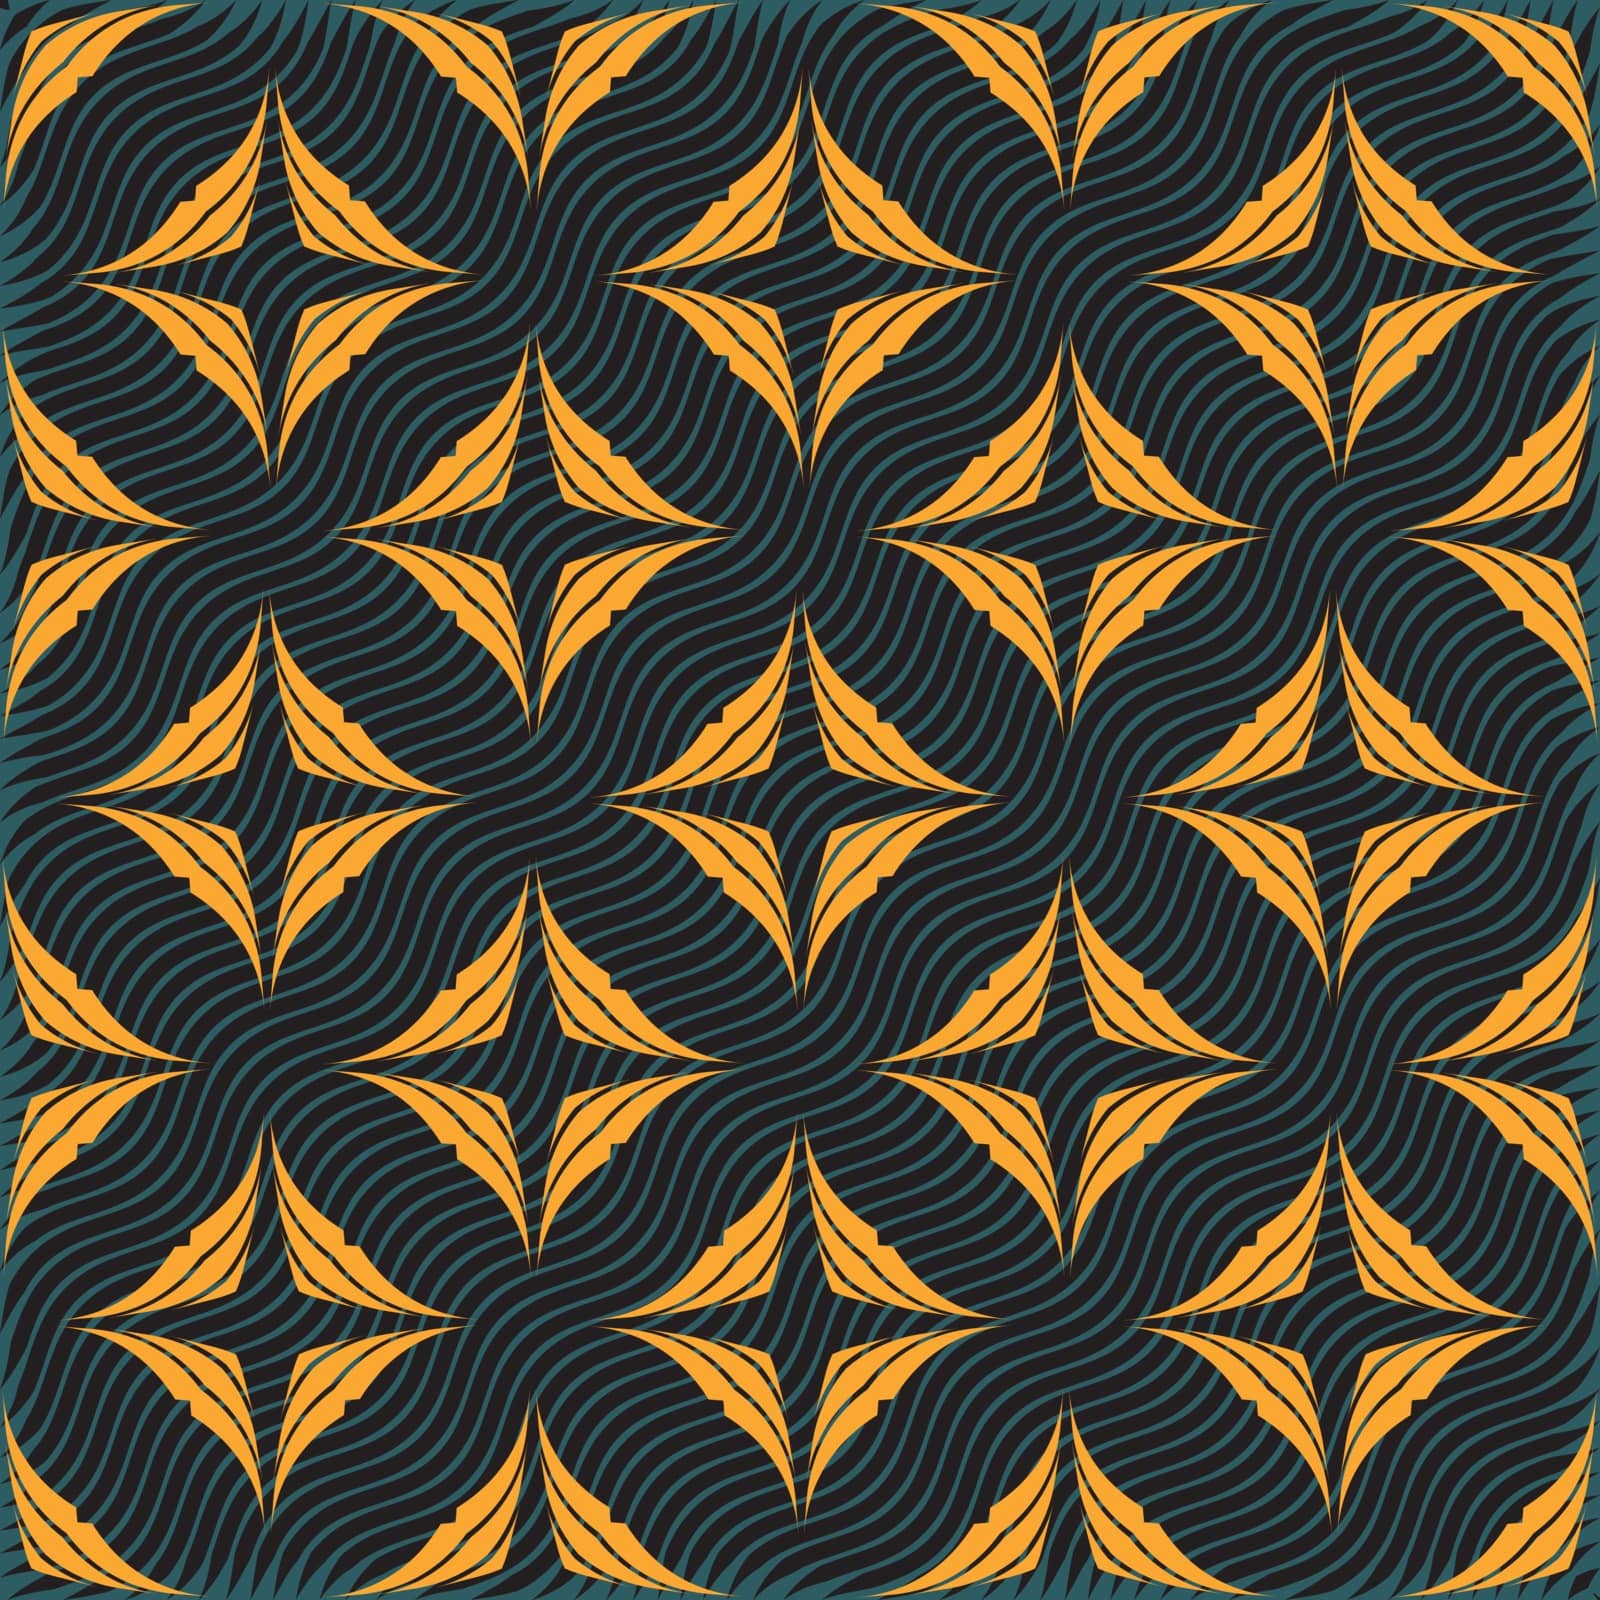 Seamless ornament pattern vector tile for multipurpose use in design